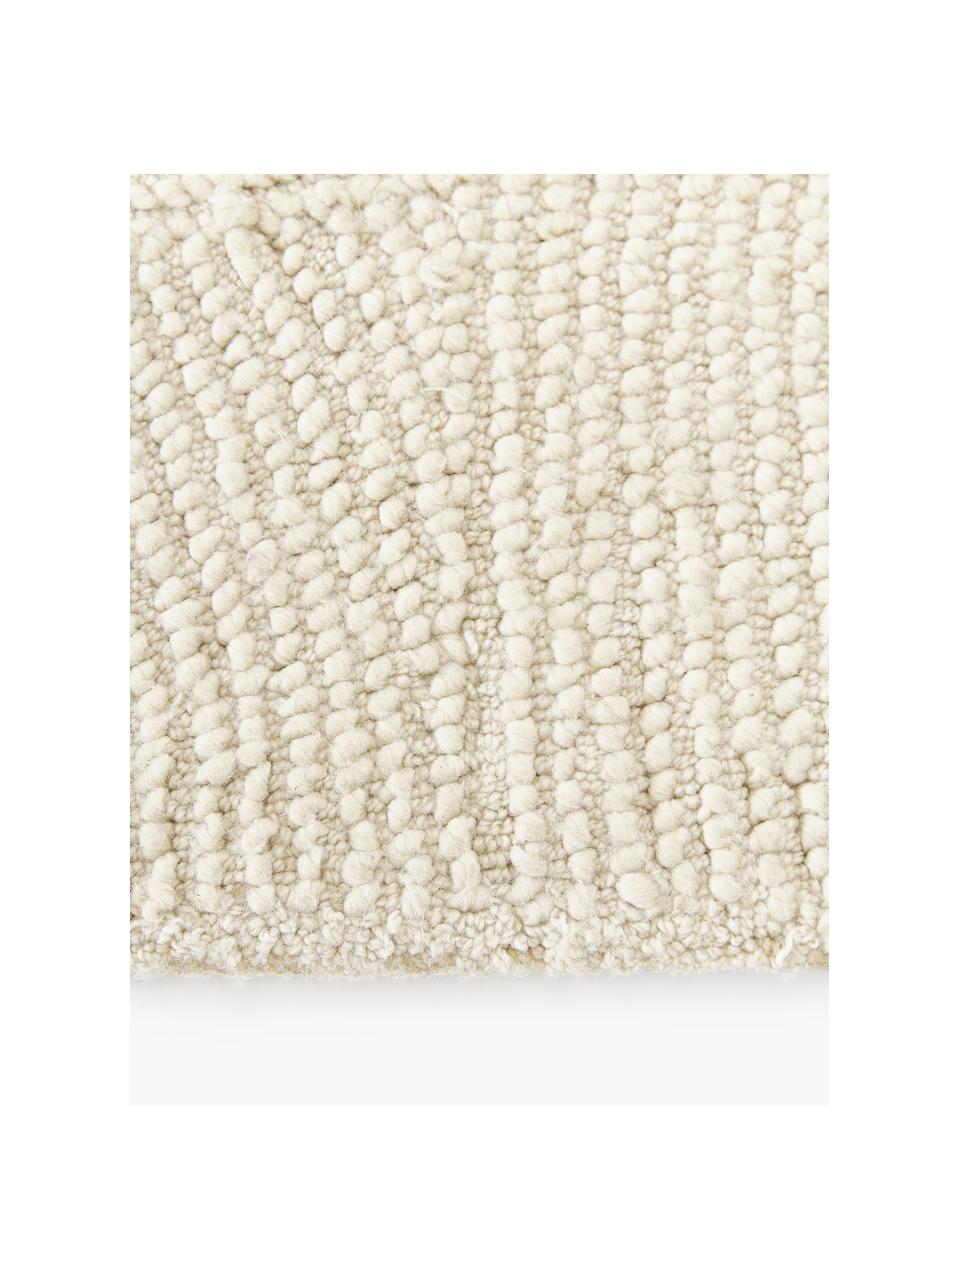 Handgetufteter Kurzflor-Teppich Eleni aus recycelten Materialien, Flor: 100 % recyceltes Polyeste, Off White, B 120 x L 180 cm (Grösse S)